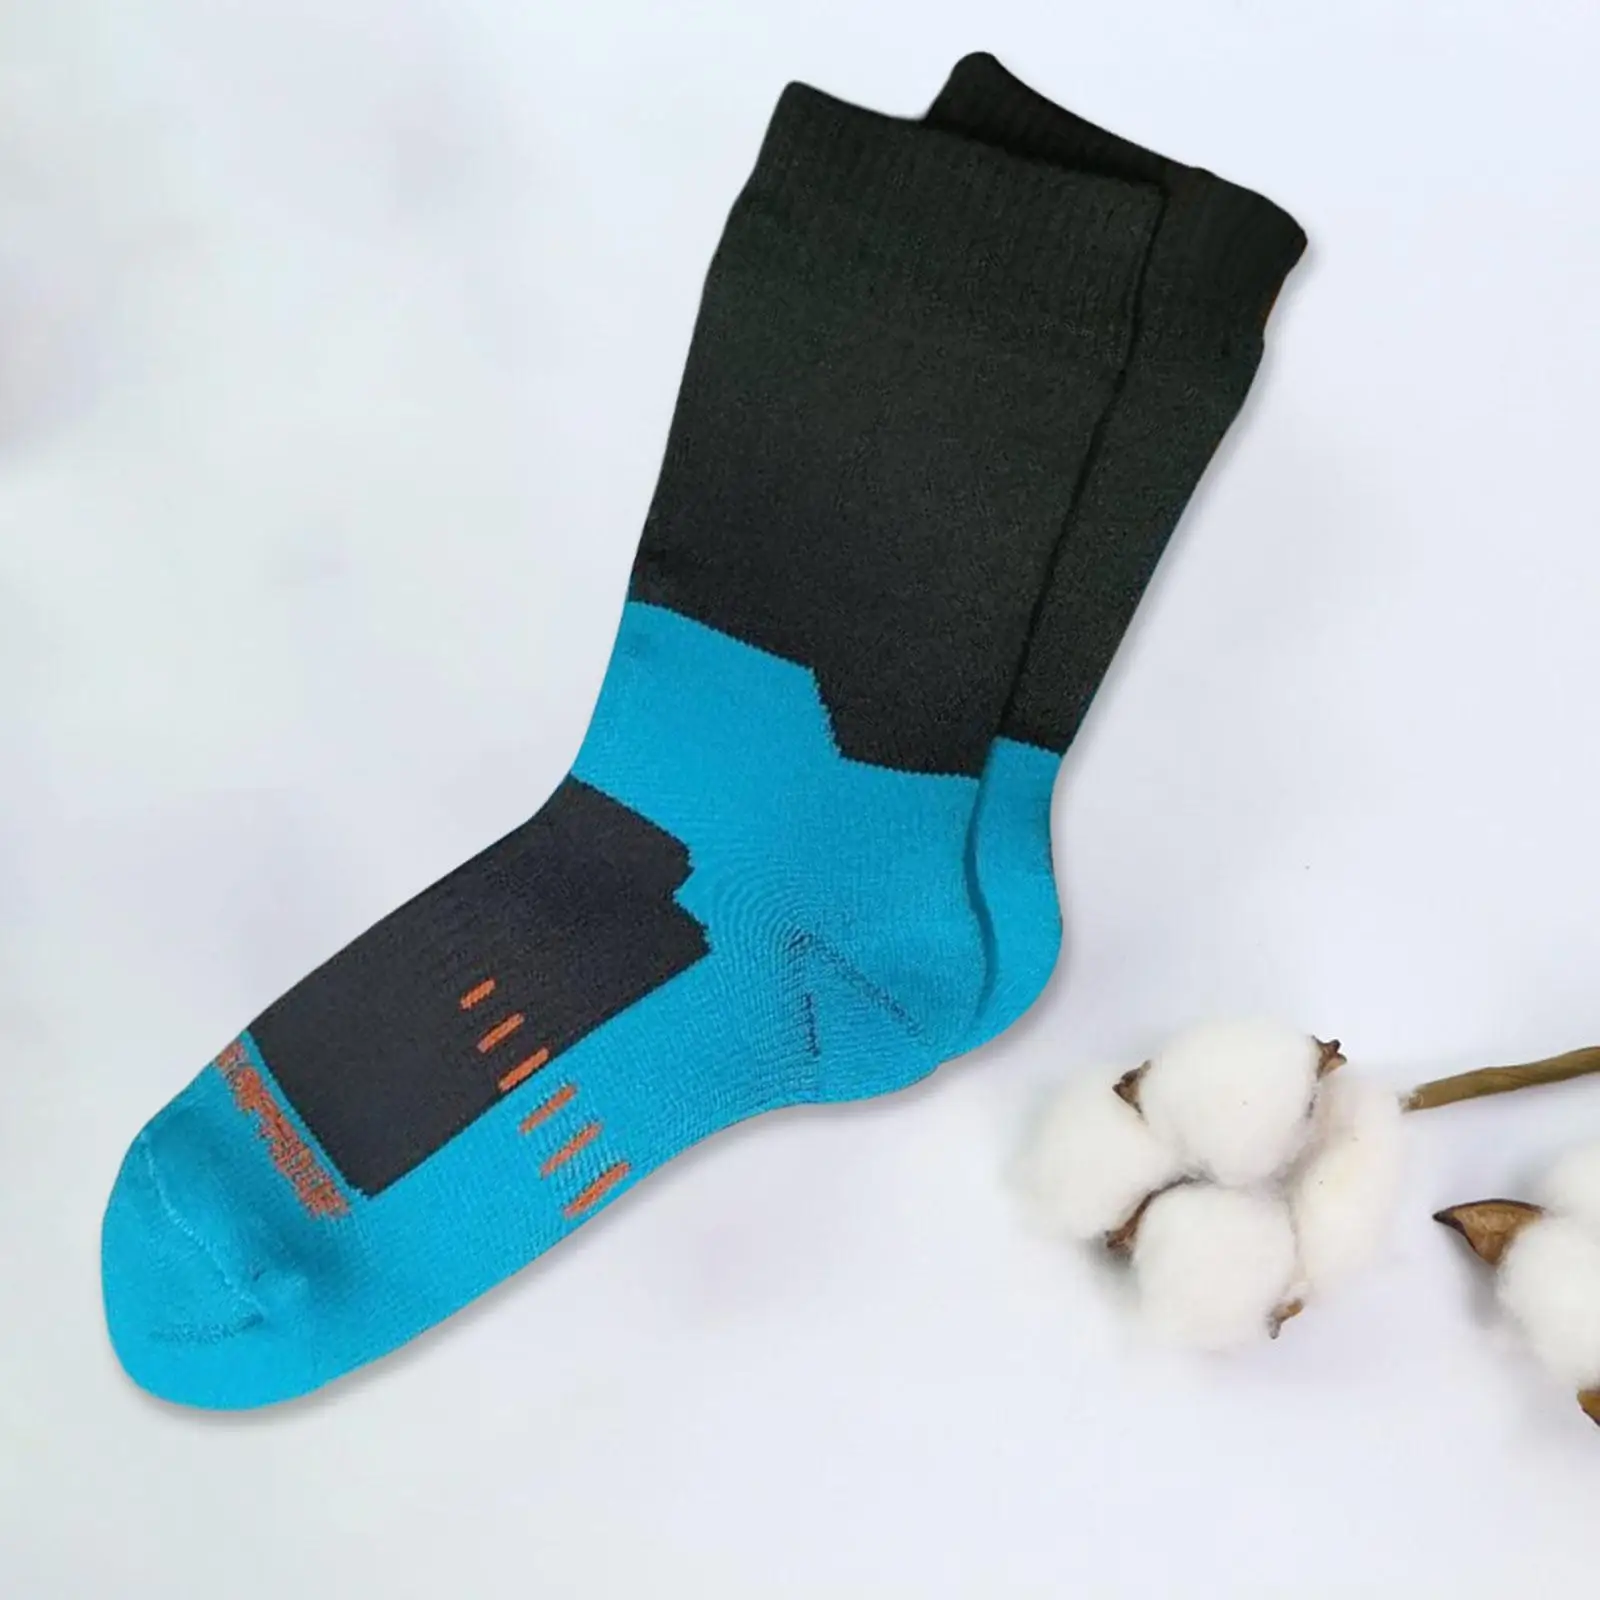 Pair Waterproof Socks Comfortable Lightweight Hiking Socking for Wading Walking